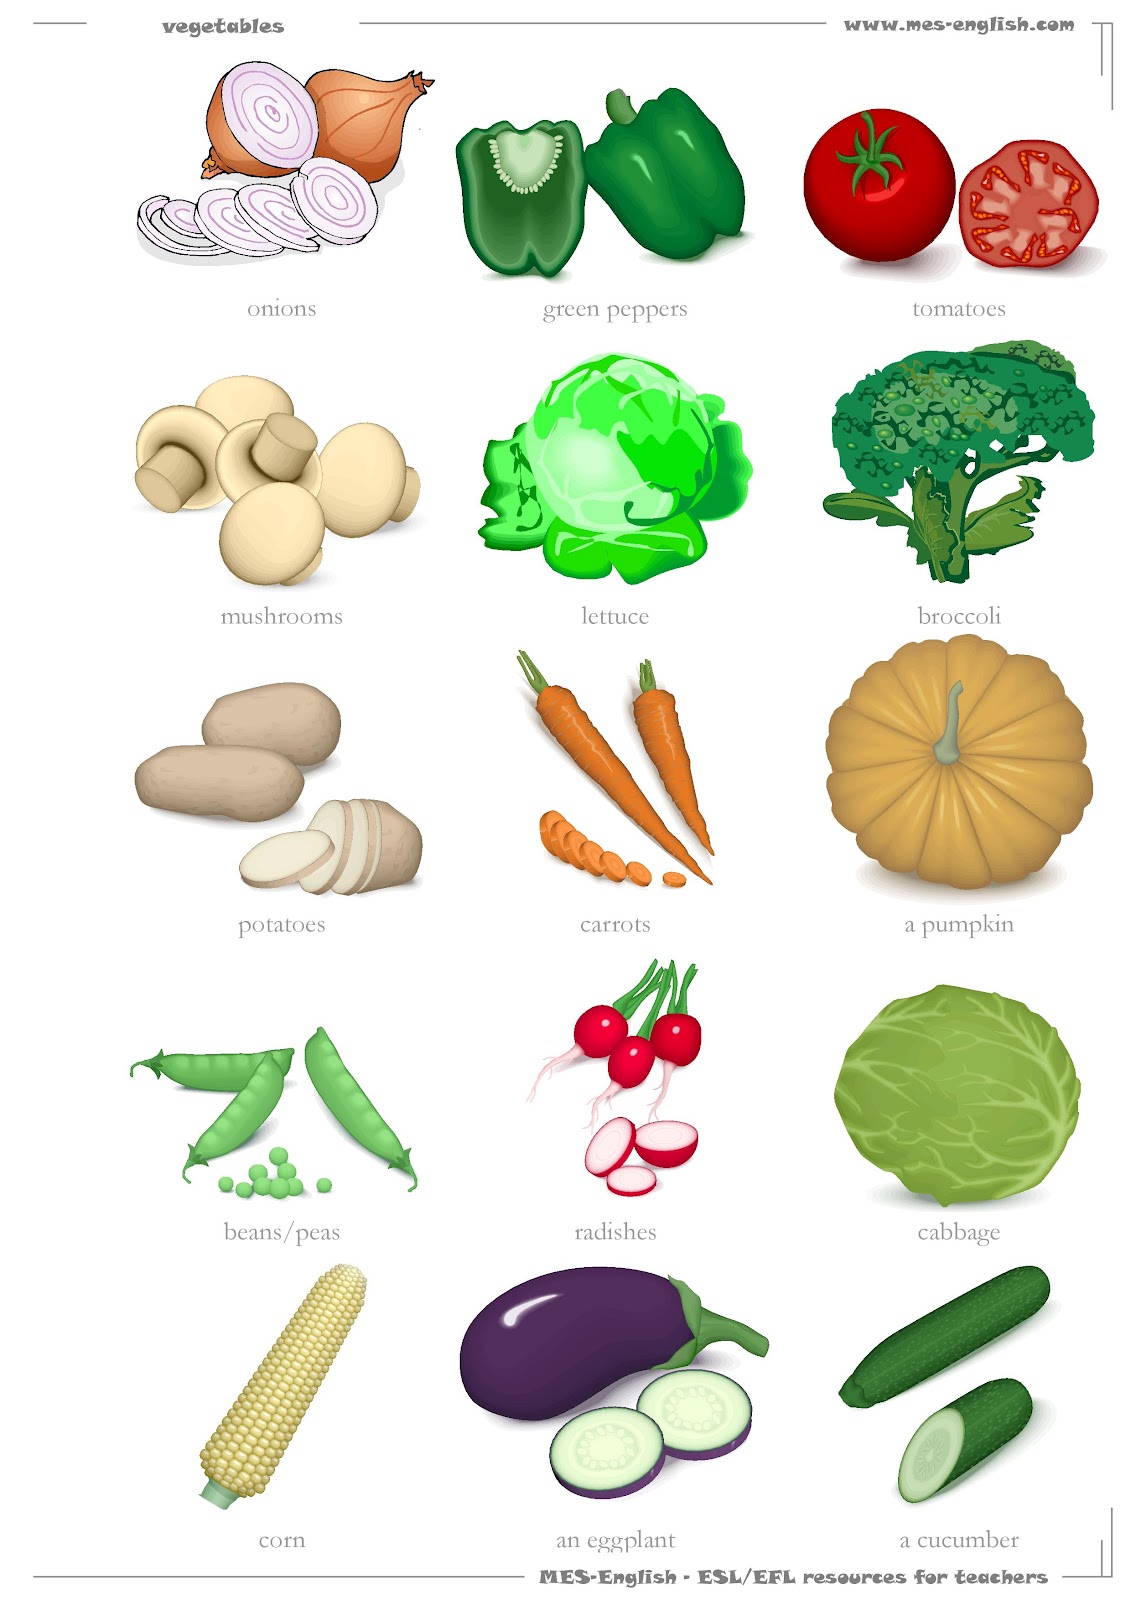 Vegetables vocabulary. Овощи. Овощи на английском. Овощи и фрукты. Тема овощи на английском.